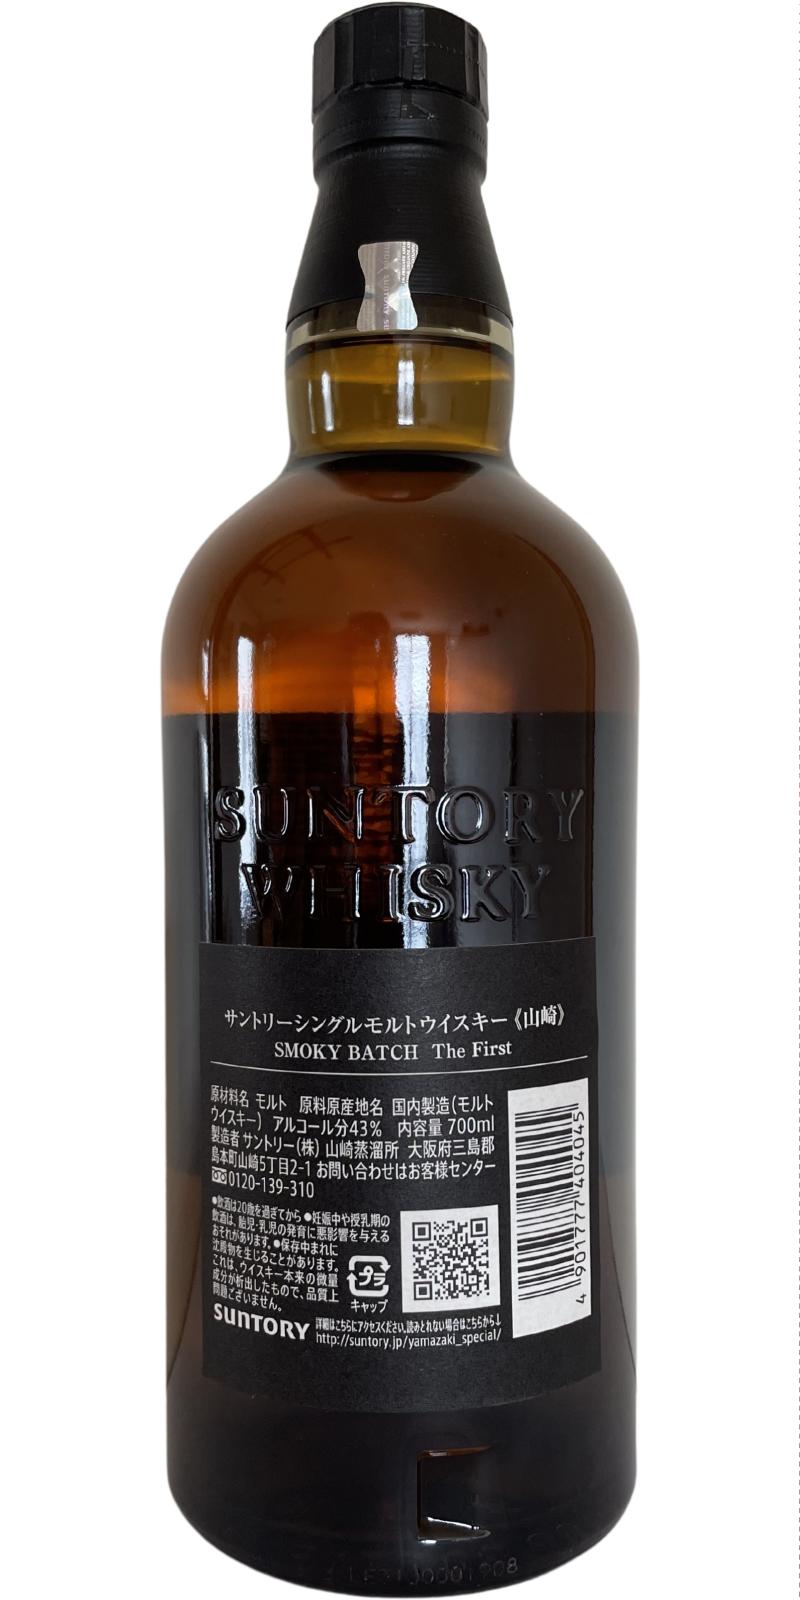 Yamazaki Smoky Batch - Ratings and reviews - Whiskybase